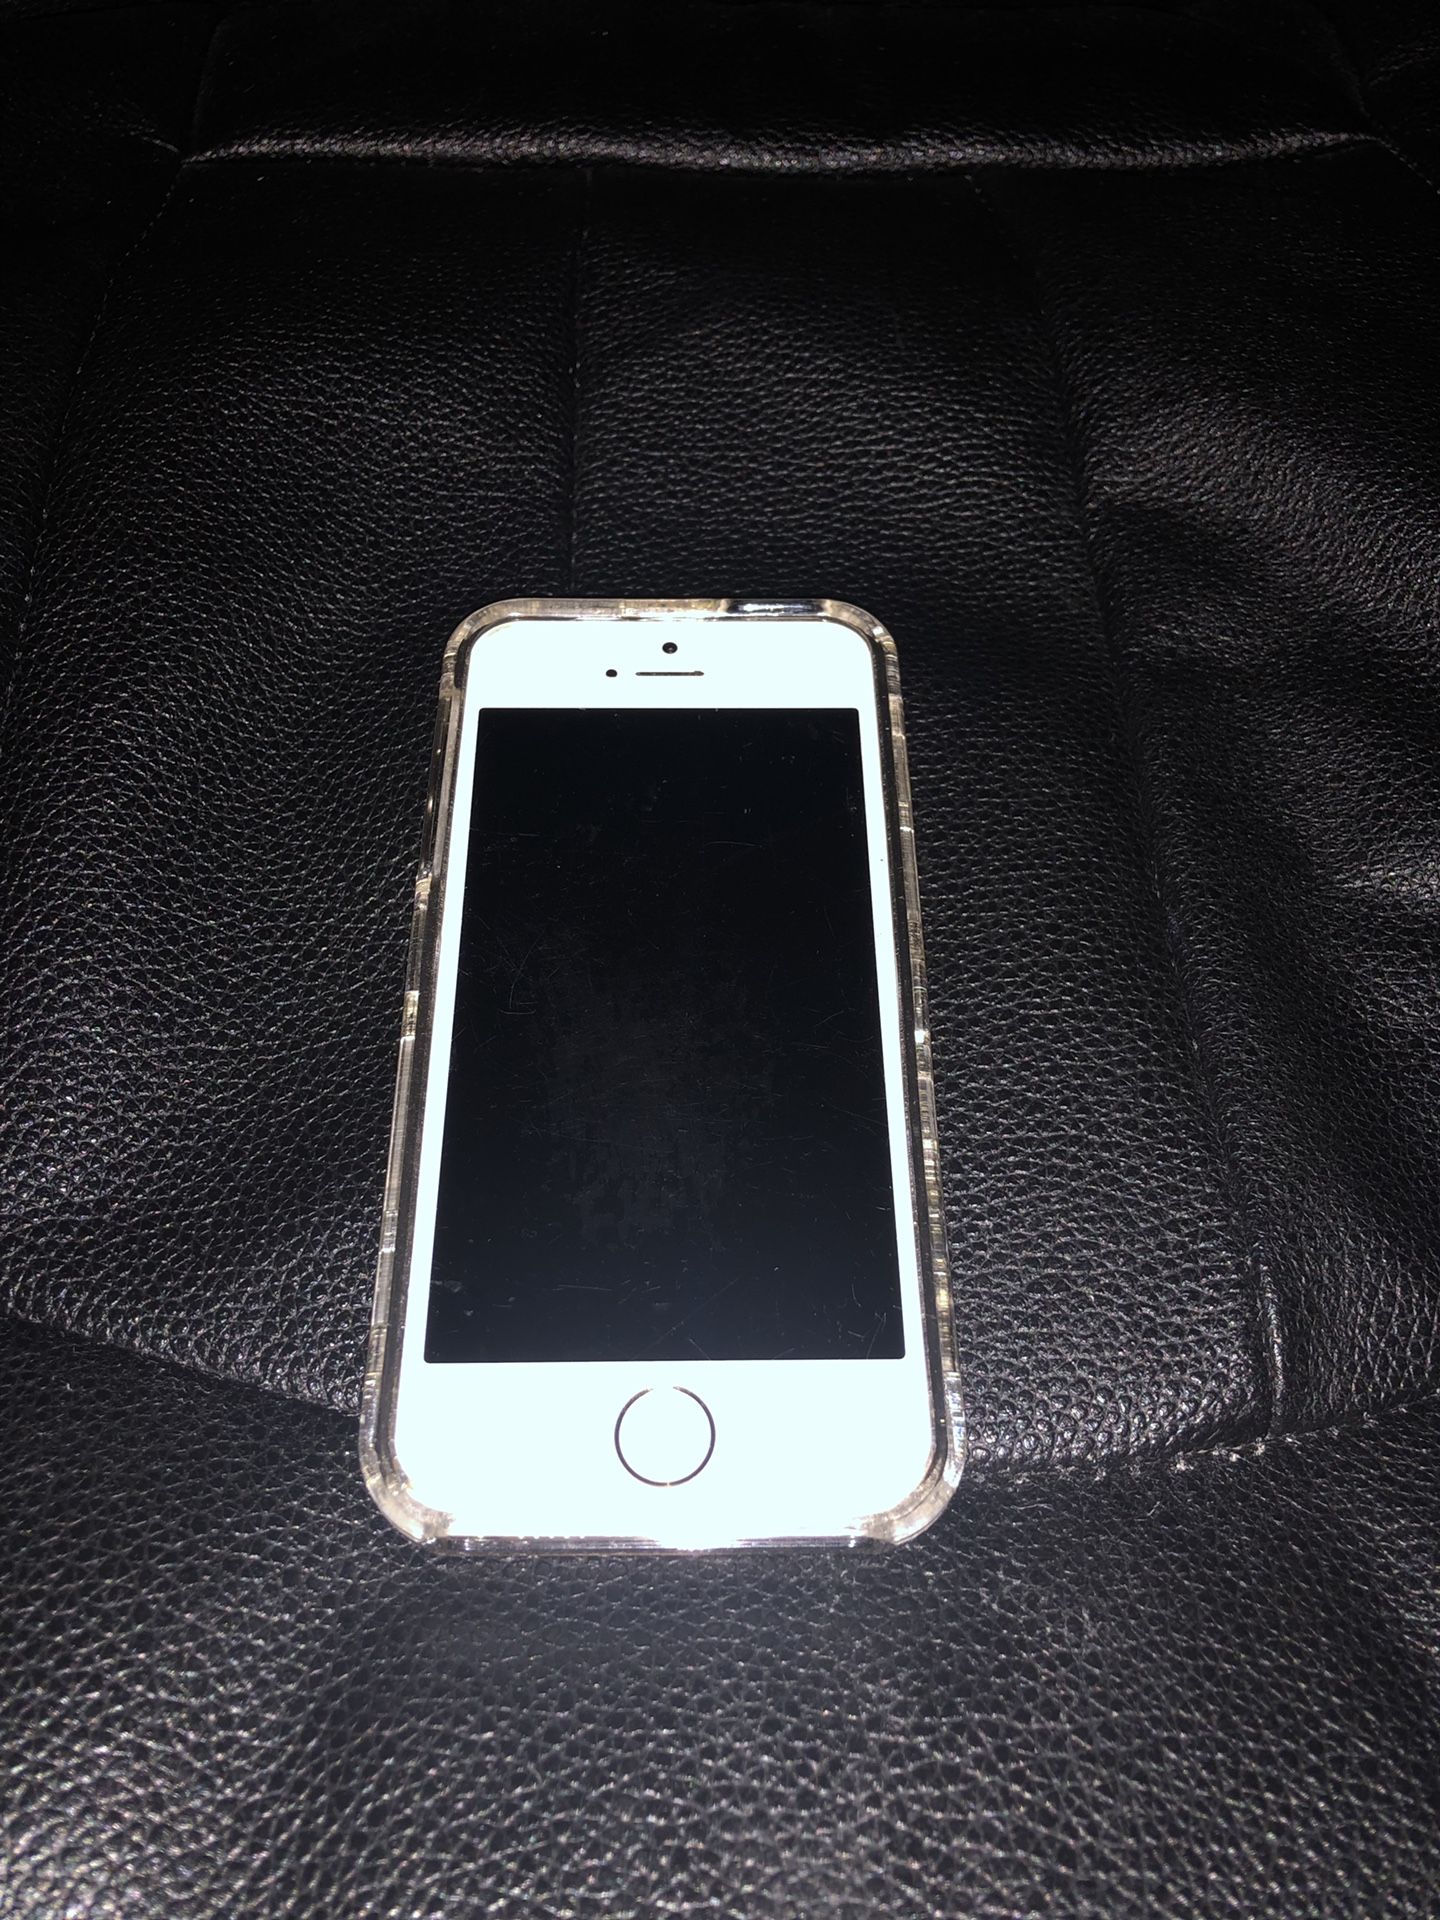 Carrier UNLOCKED iPhone 5 16G